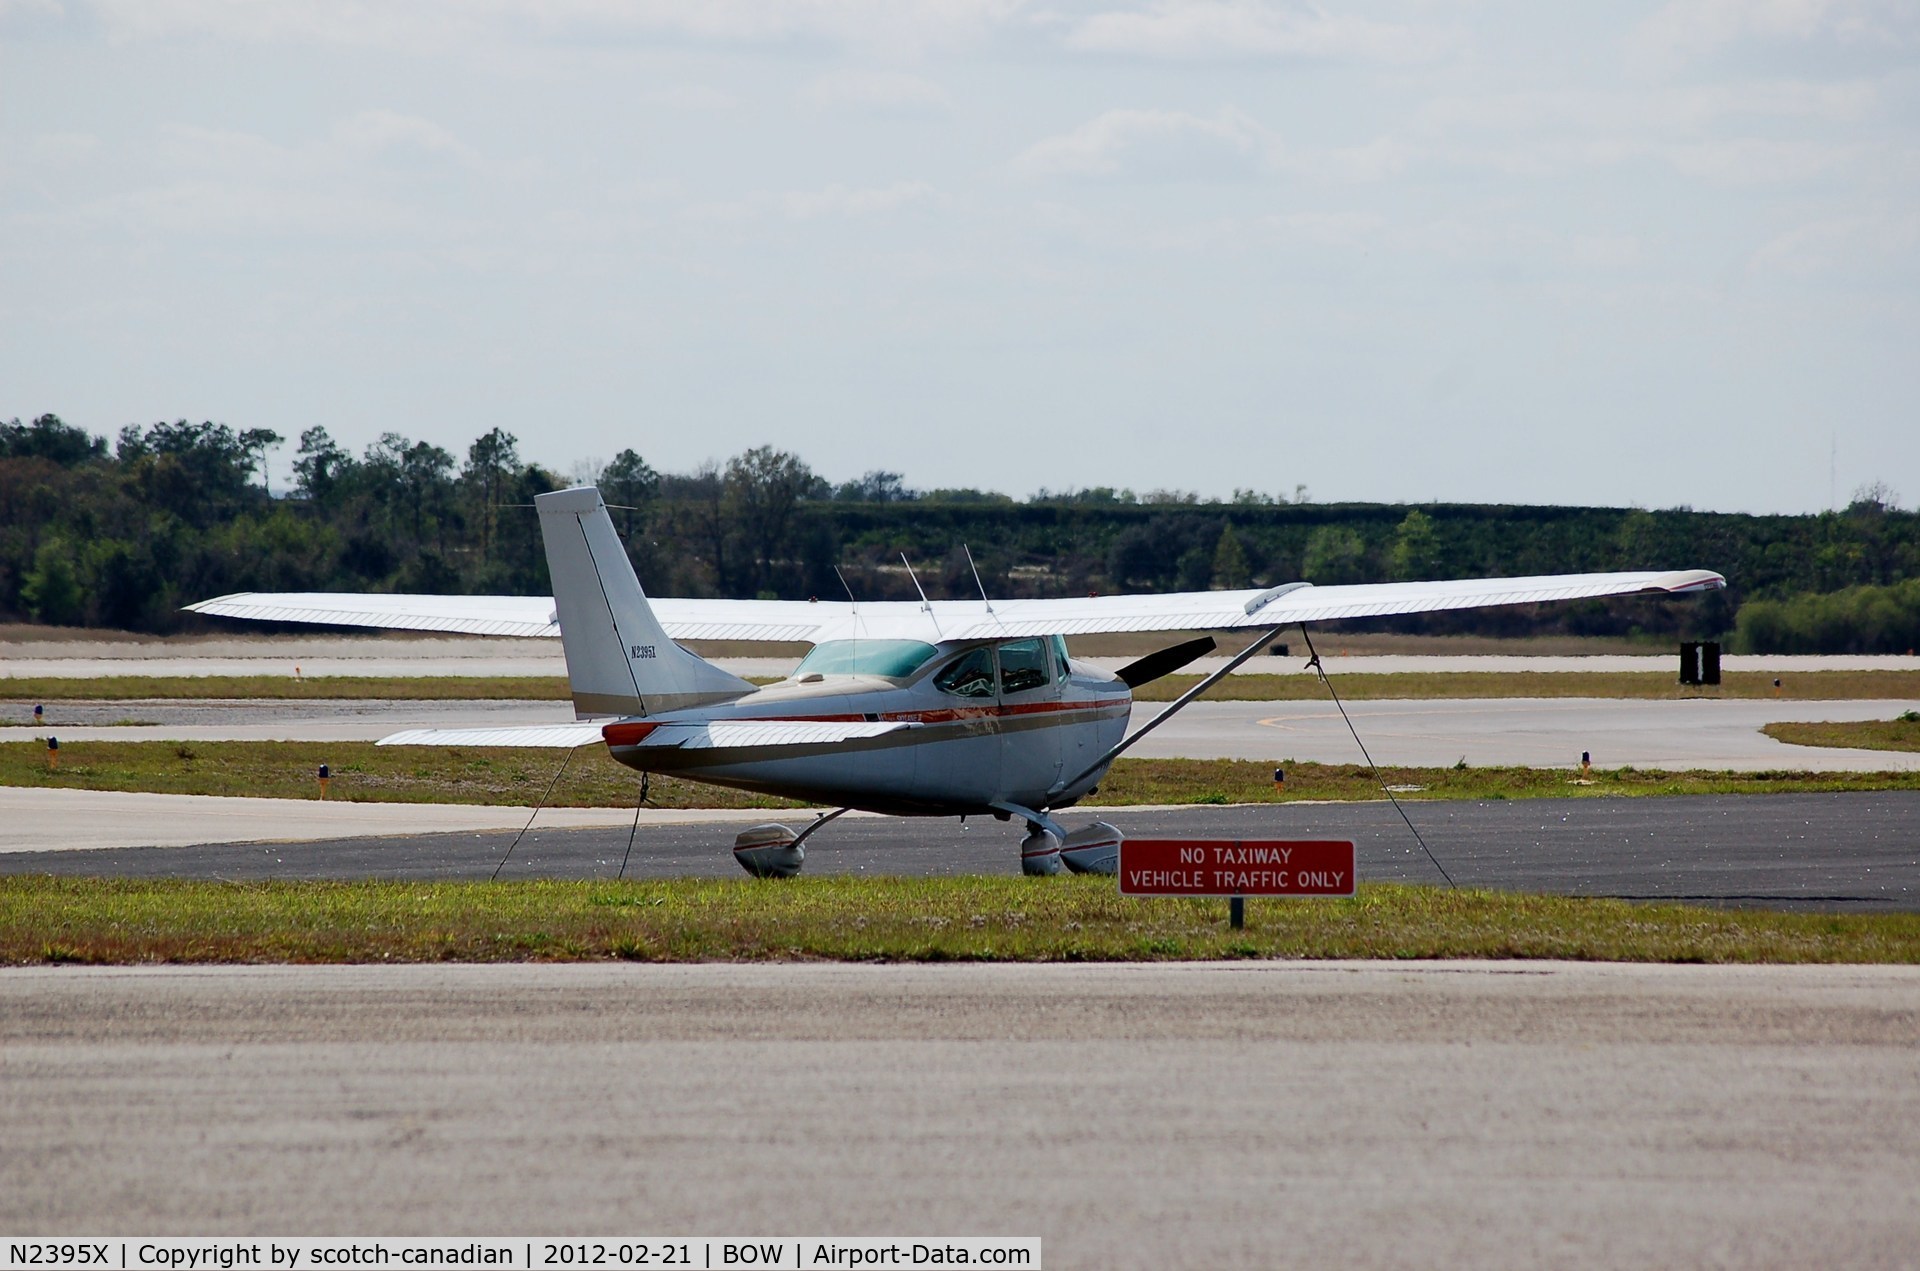 N2395X, 1965 Cessna 182H Skylane C/N 18256295, 1965 Cessna 182H N2395X at Bartow Municipal Airport, Bartow, FL